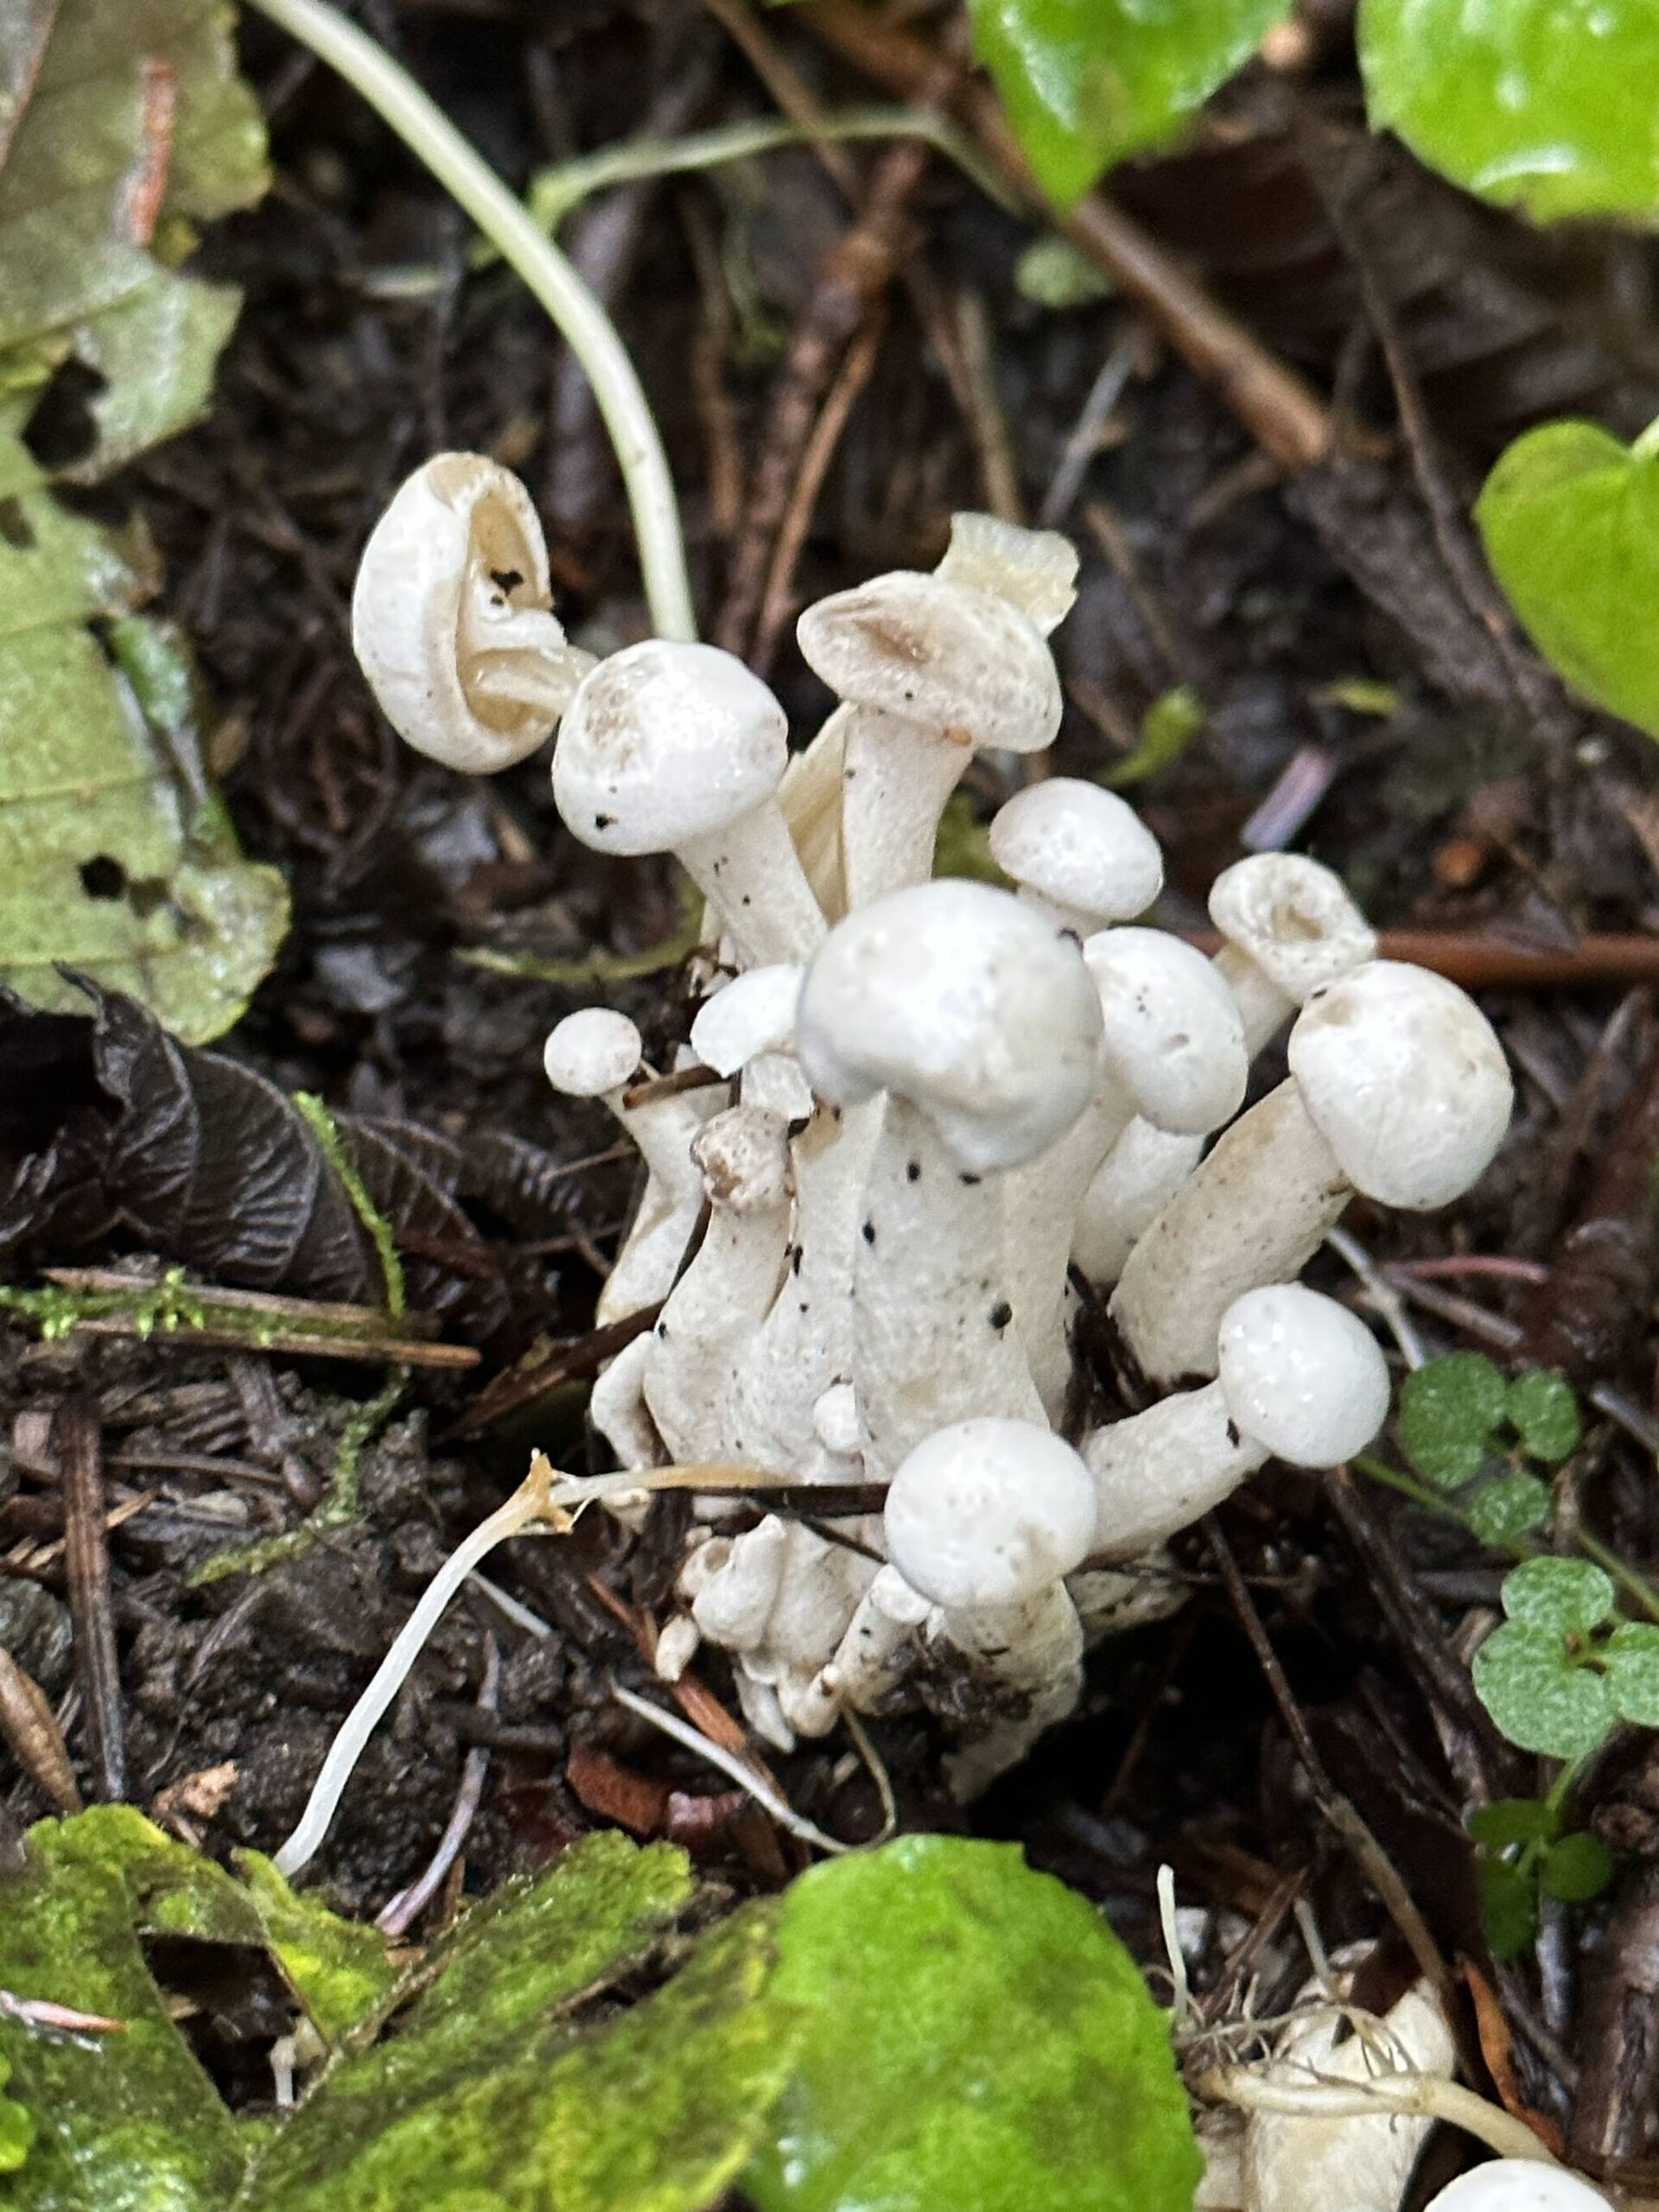 A cluster of mushrooms on the Dzantik’i Heeni Loop Trail on Sept. 16. (Photo by Deana Barajas)